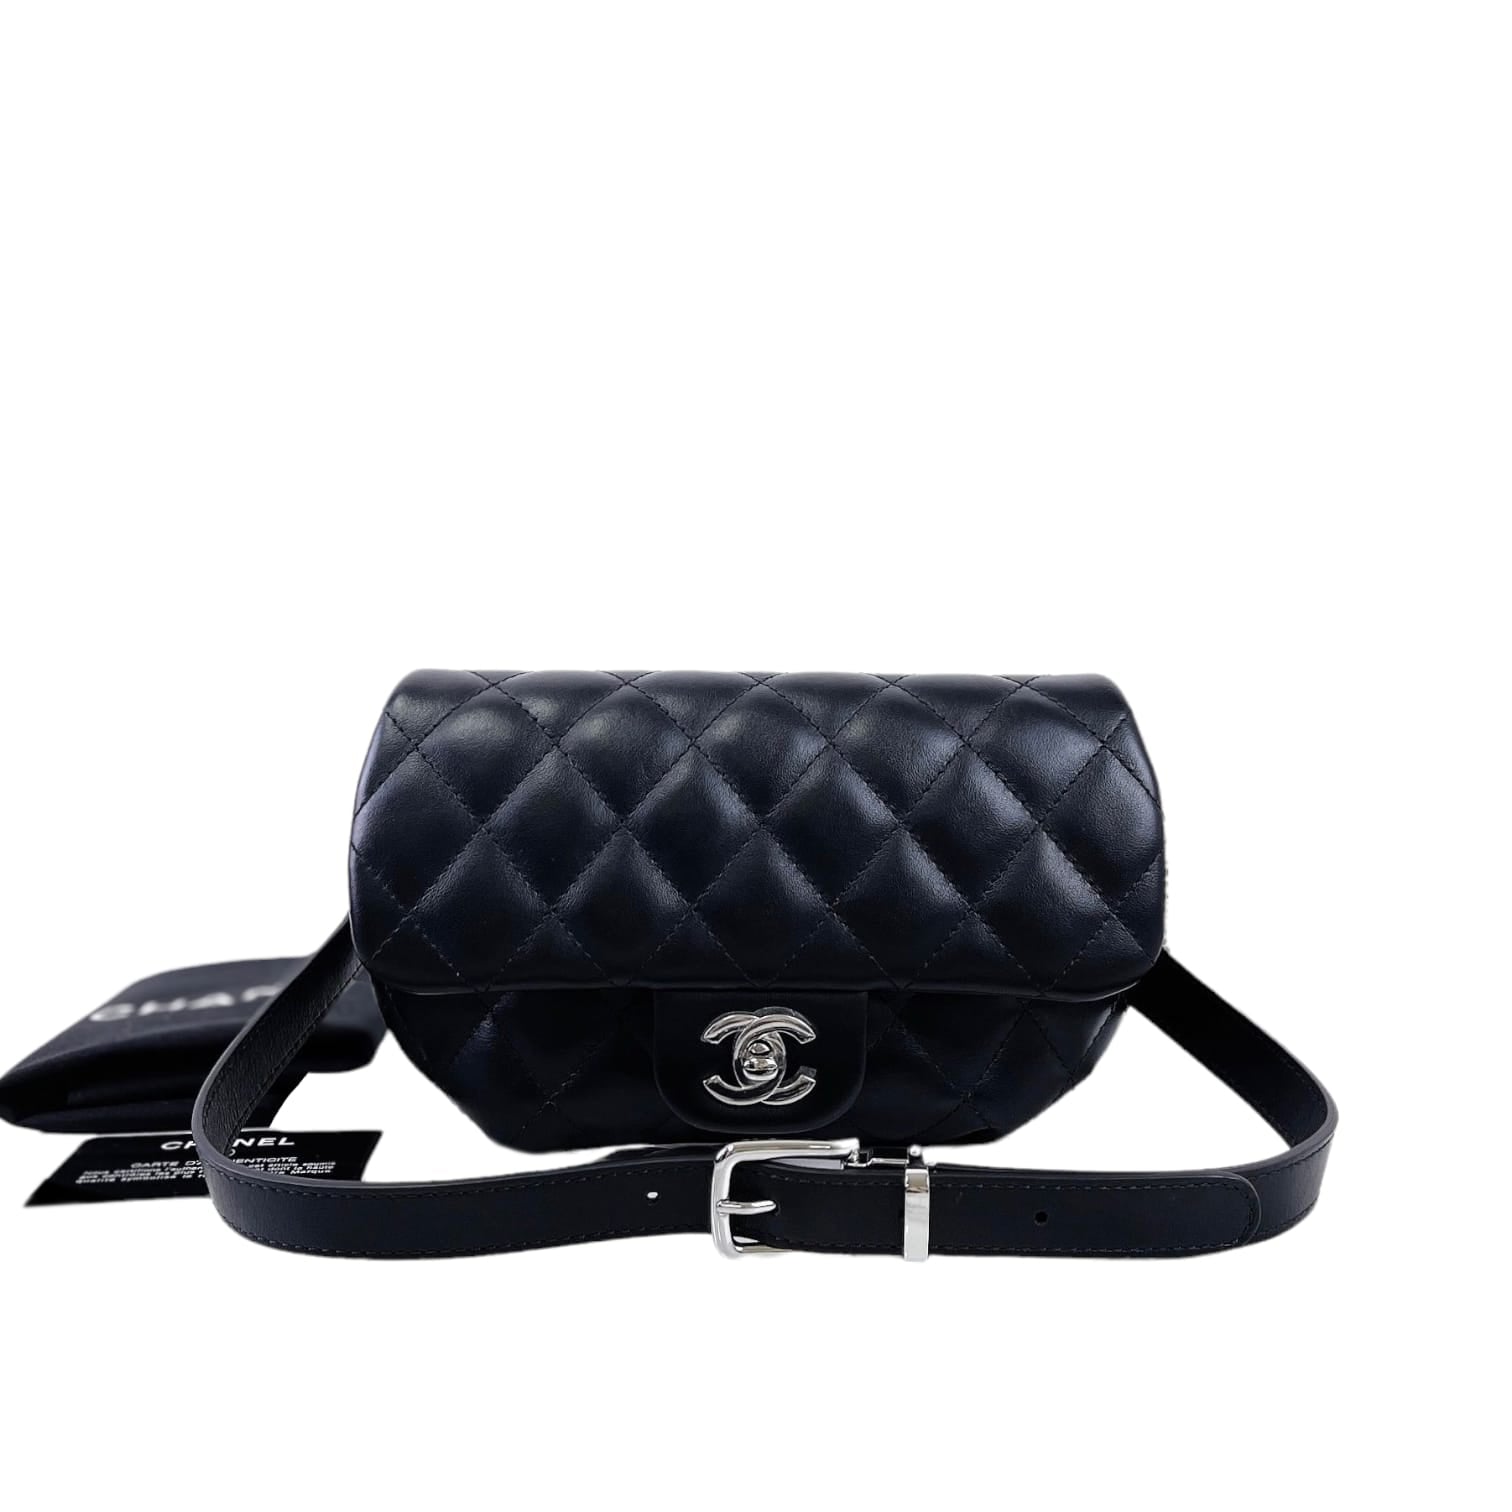 Chanel Pochette Ceinture clutch-belt in Black Quilted Grained